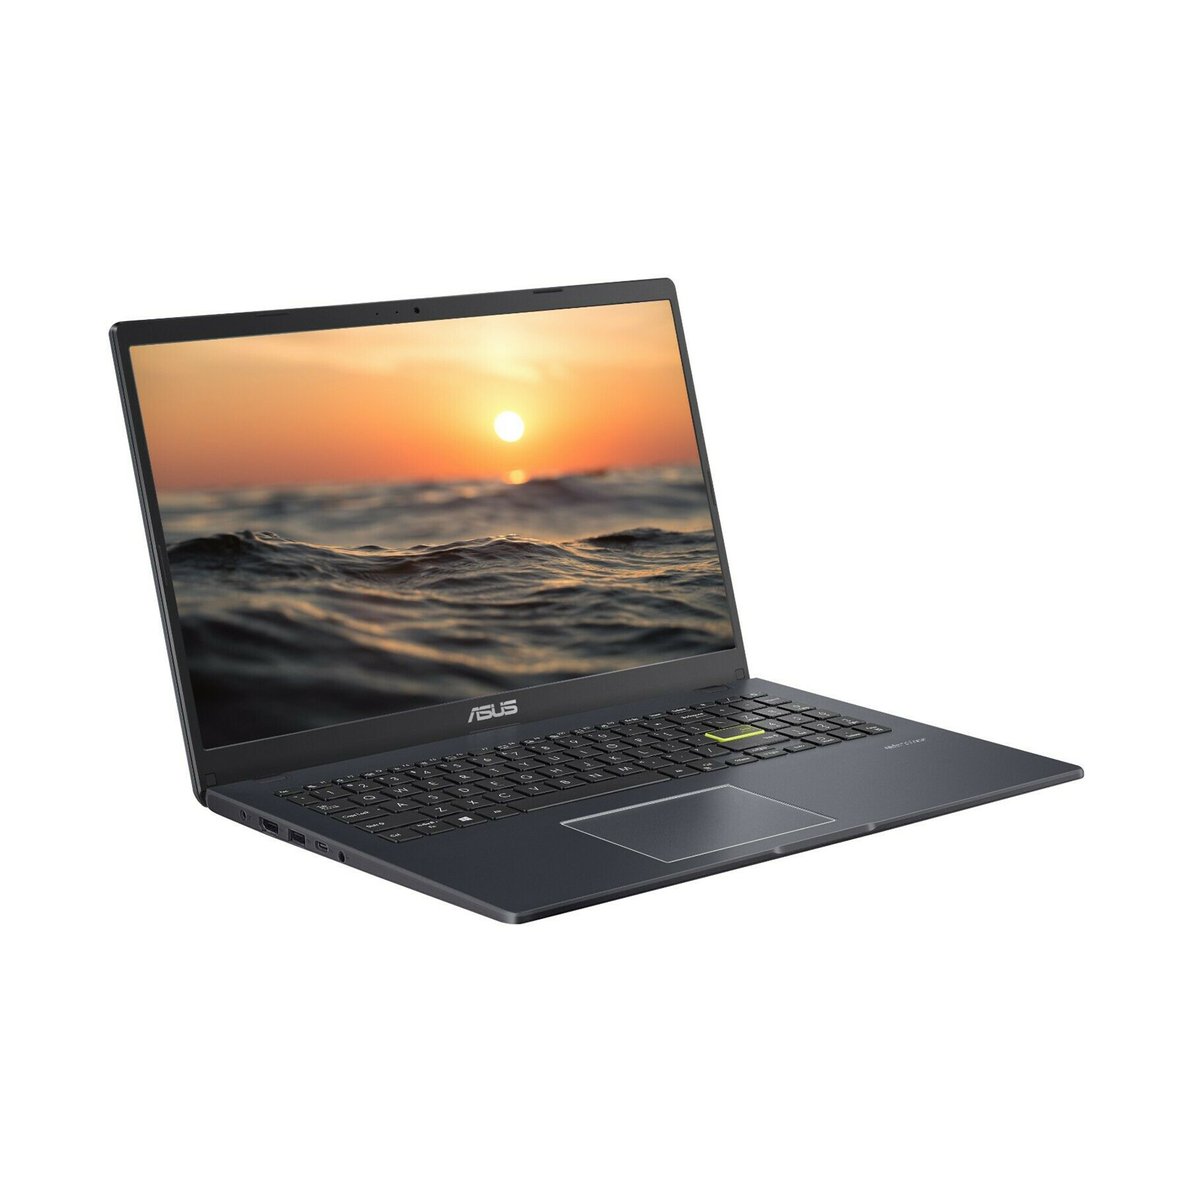 Asus Notebook L510MA-WB04 Intel Celeron,4GB RAM,128GB eMMC,Integrated Graphics,15.6" FHD LcD,Windows 10,English Keyboard